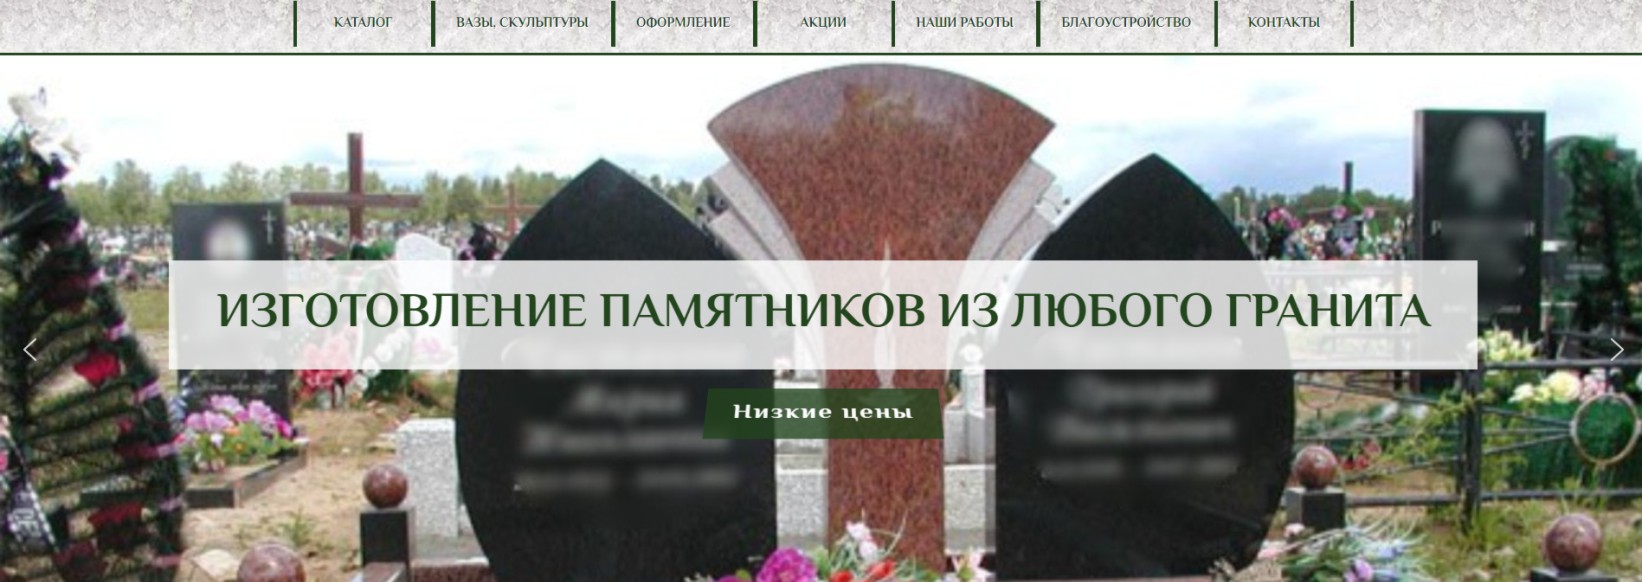 Разработка сайтов в Минске